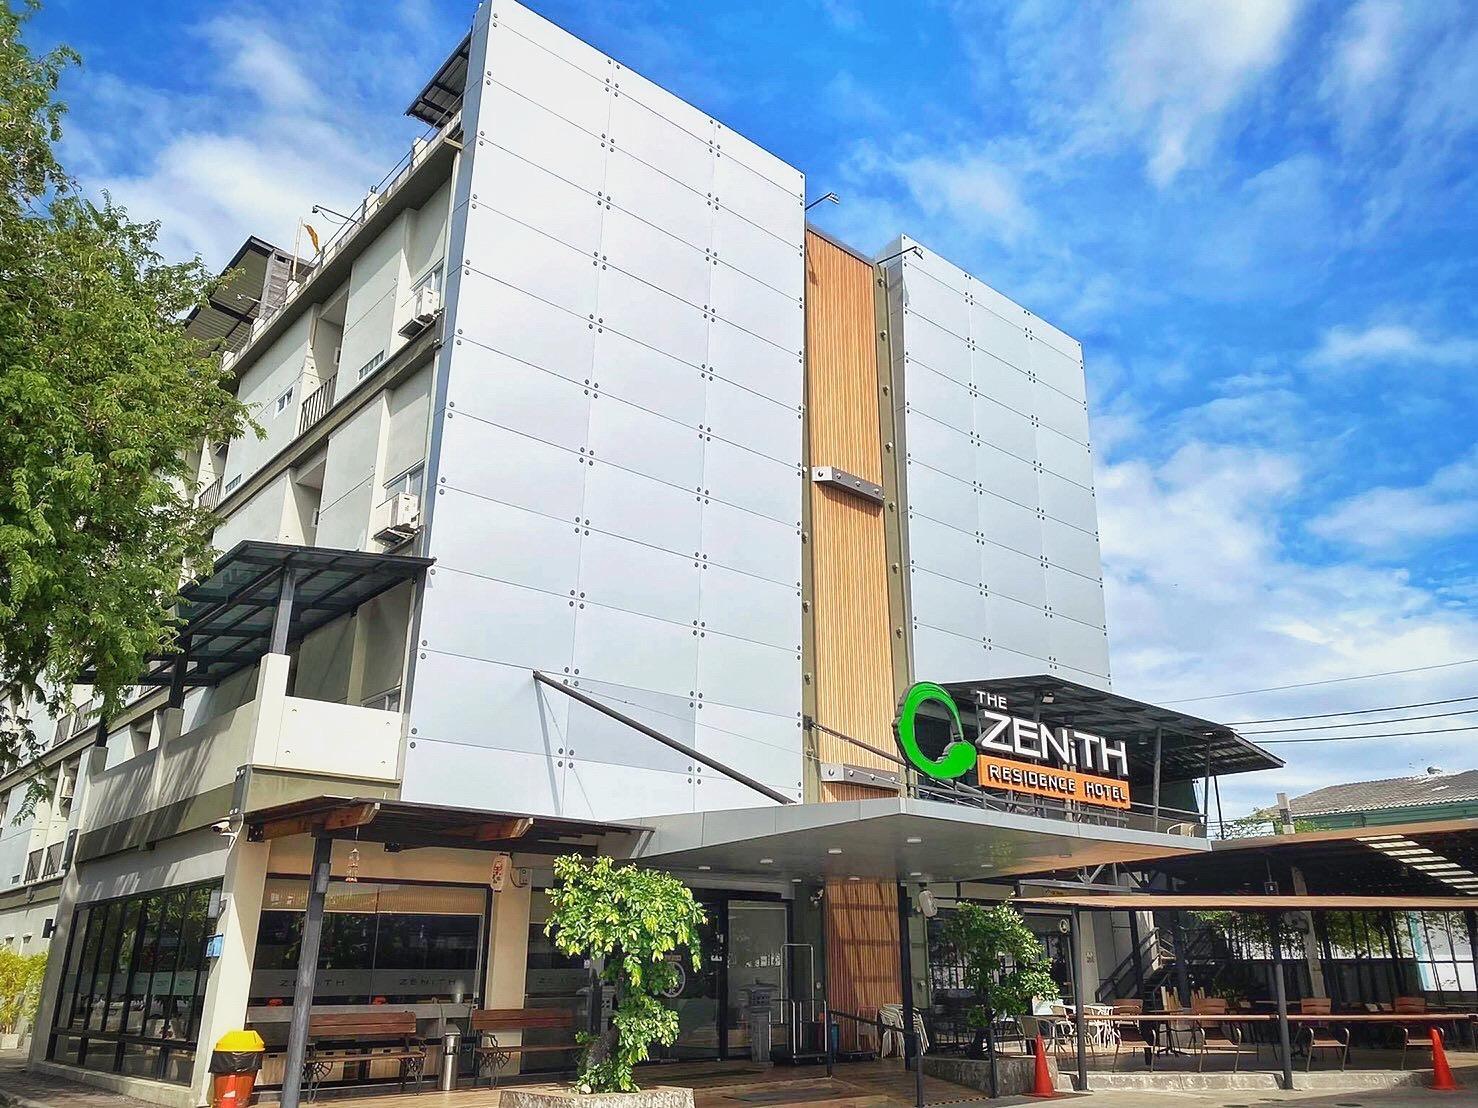 Zenith Residence Hotel image